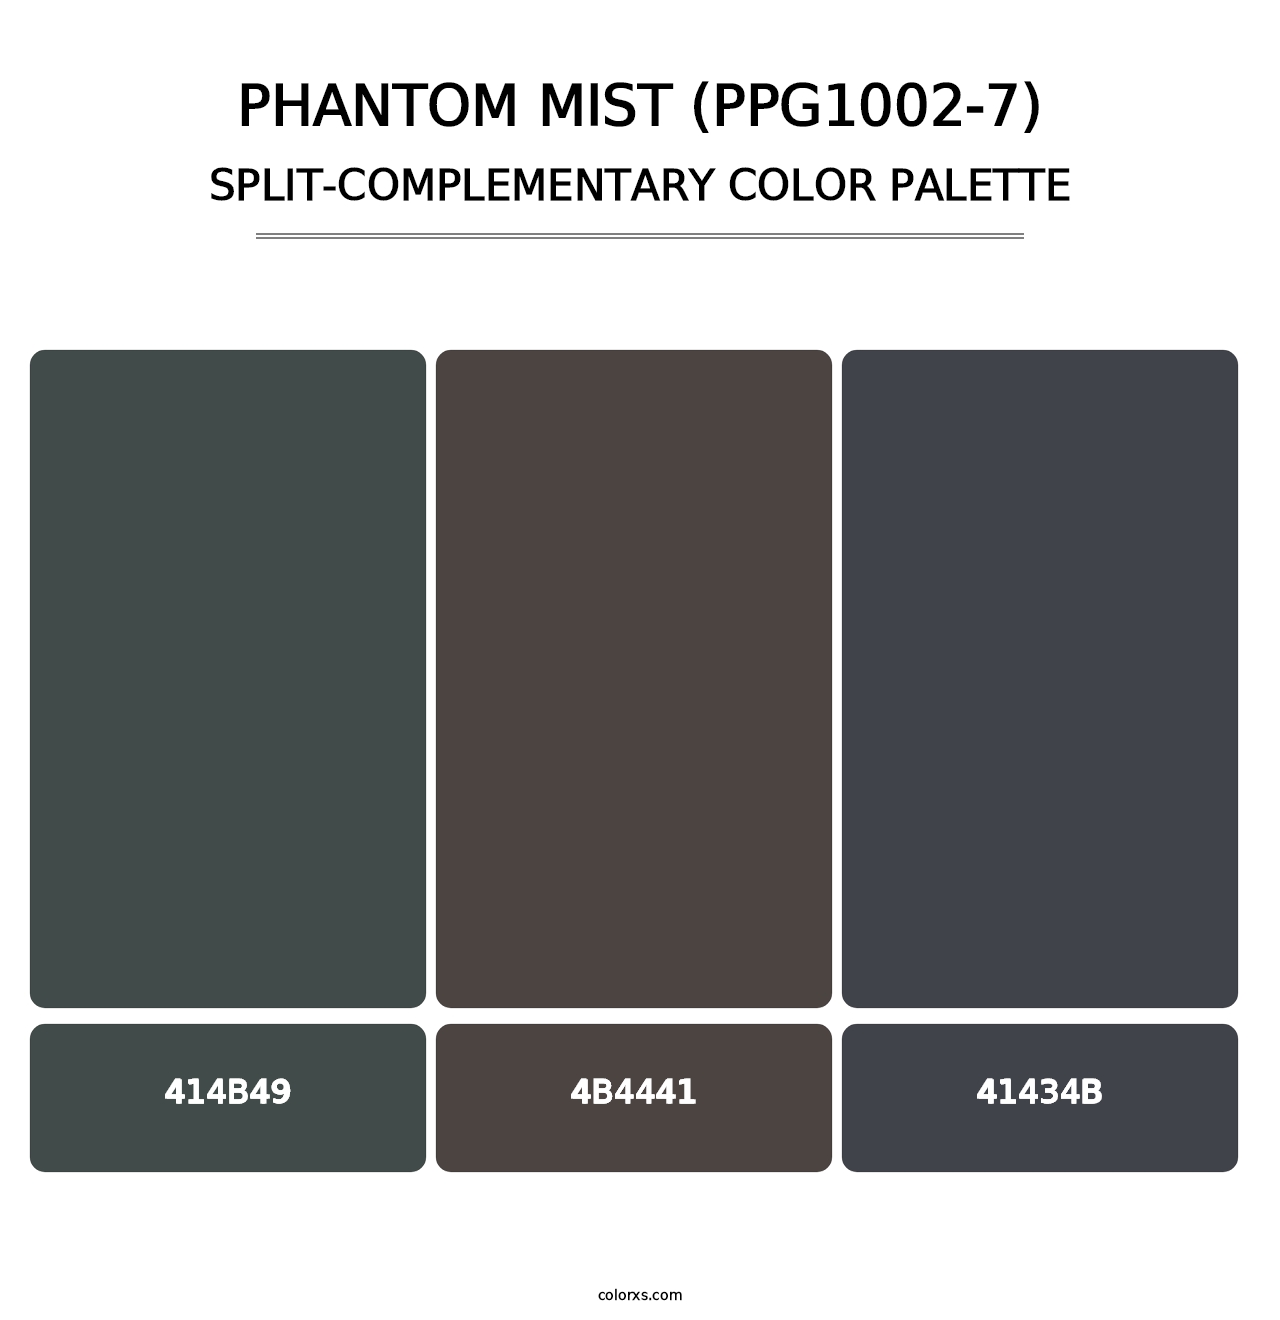 Phantom Mist (PPG1002-7) - Split-Complementary Color Palette